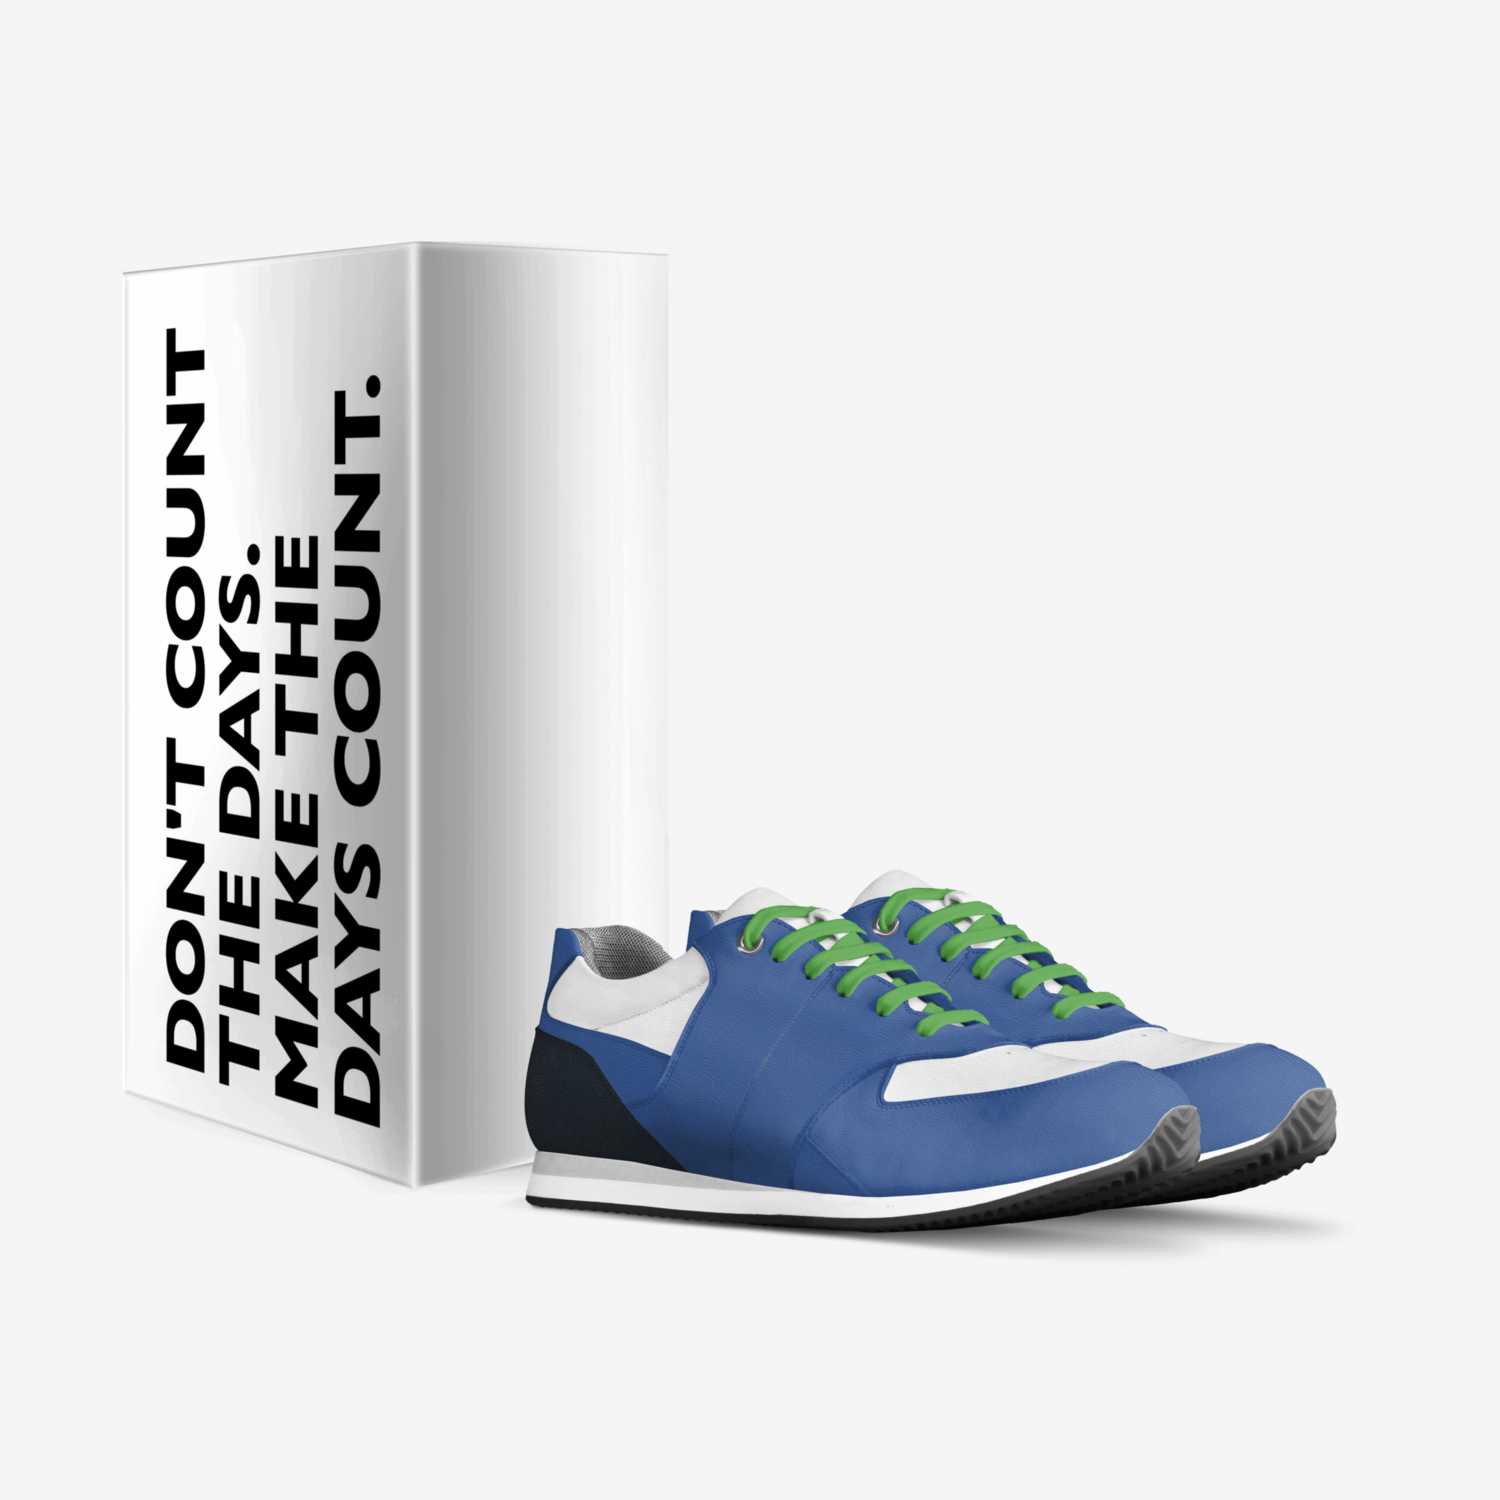 StepByStep custom made in Italy shoes by Tarandeep Singh Bhogal | Box view